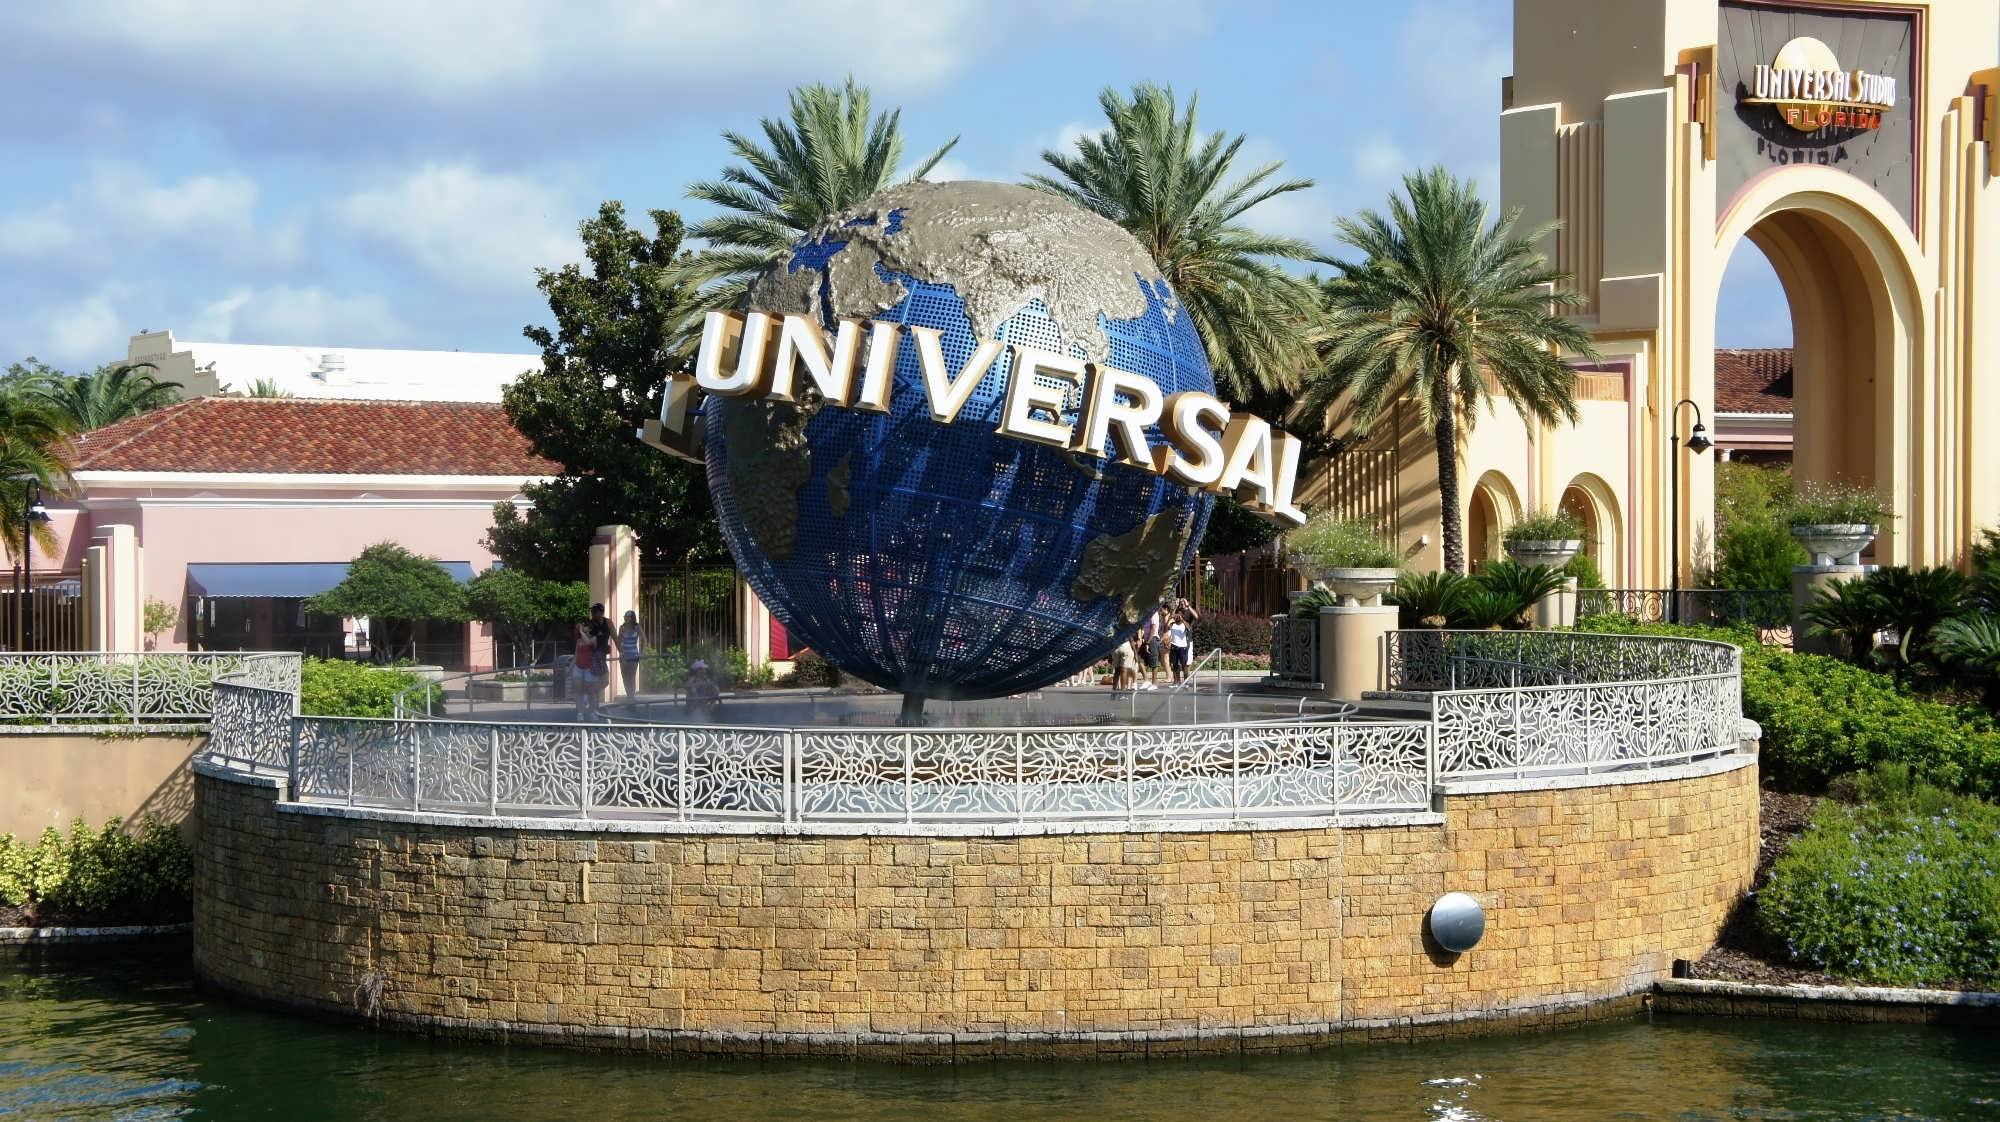 Special needs are Universal: Visiting Universal Orlando & Walt Disney